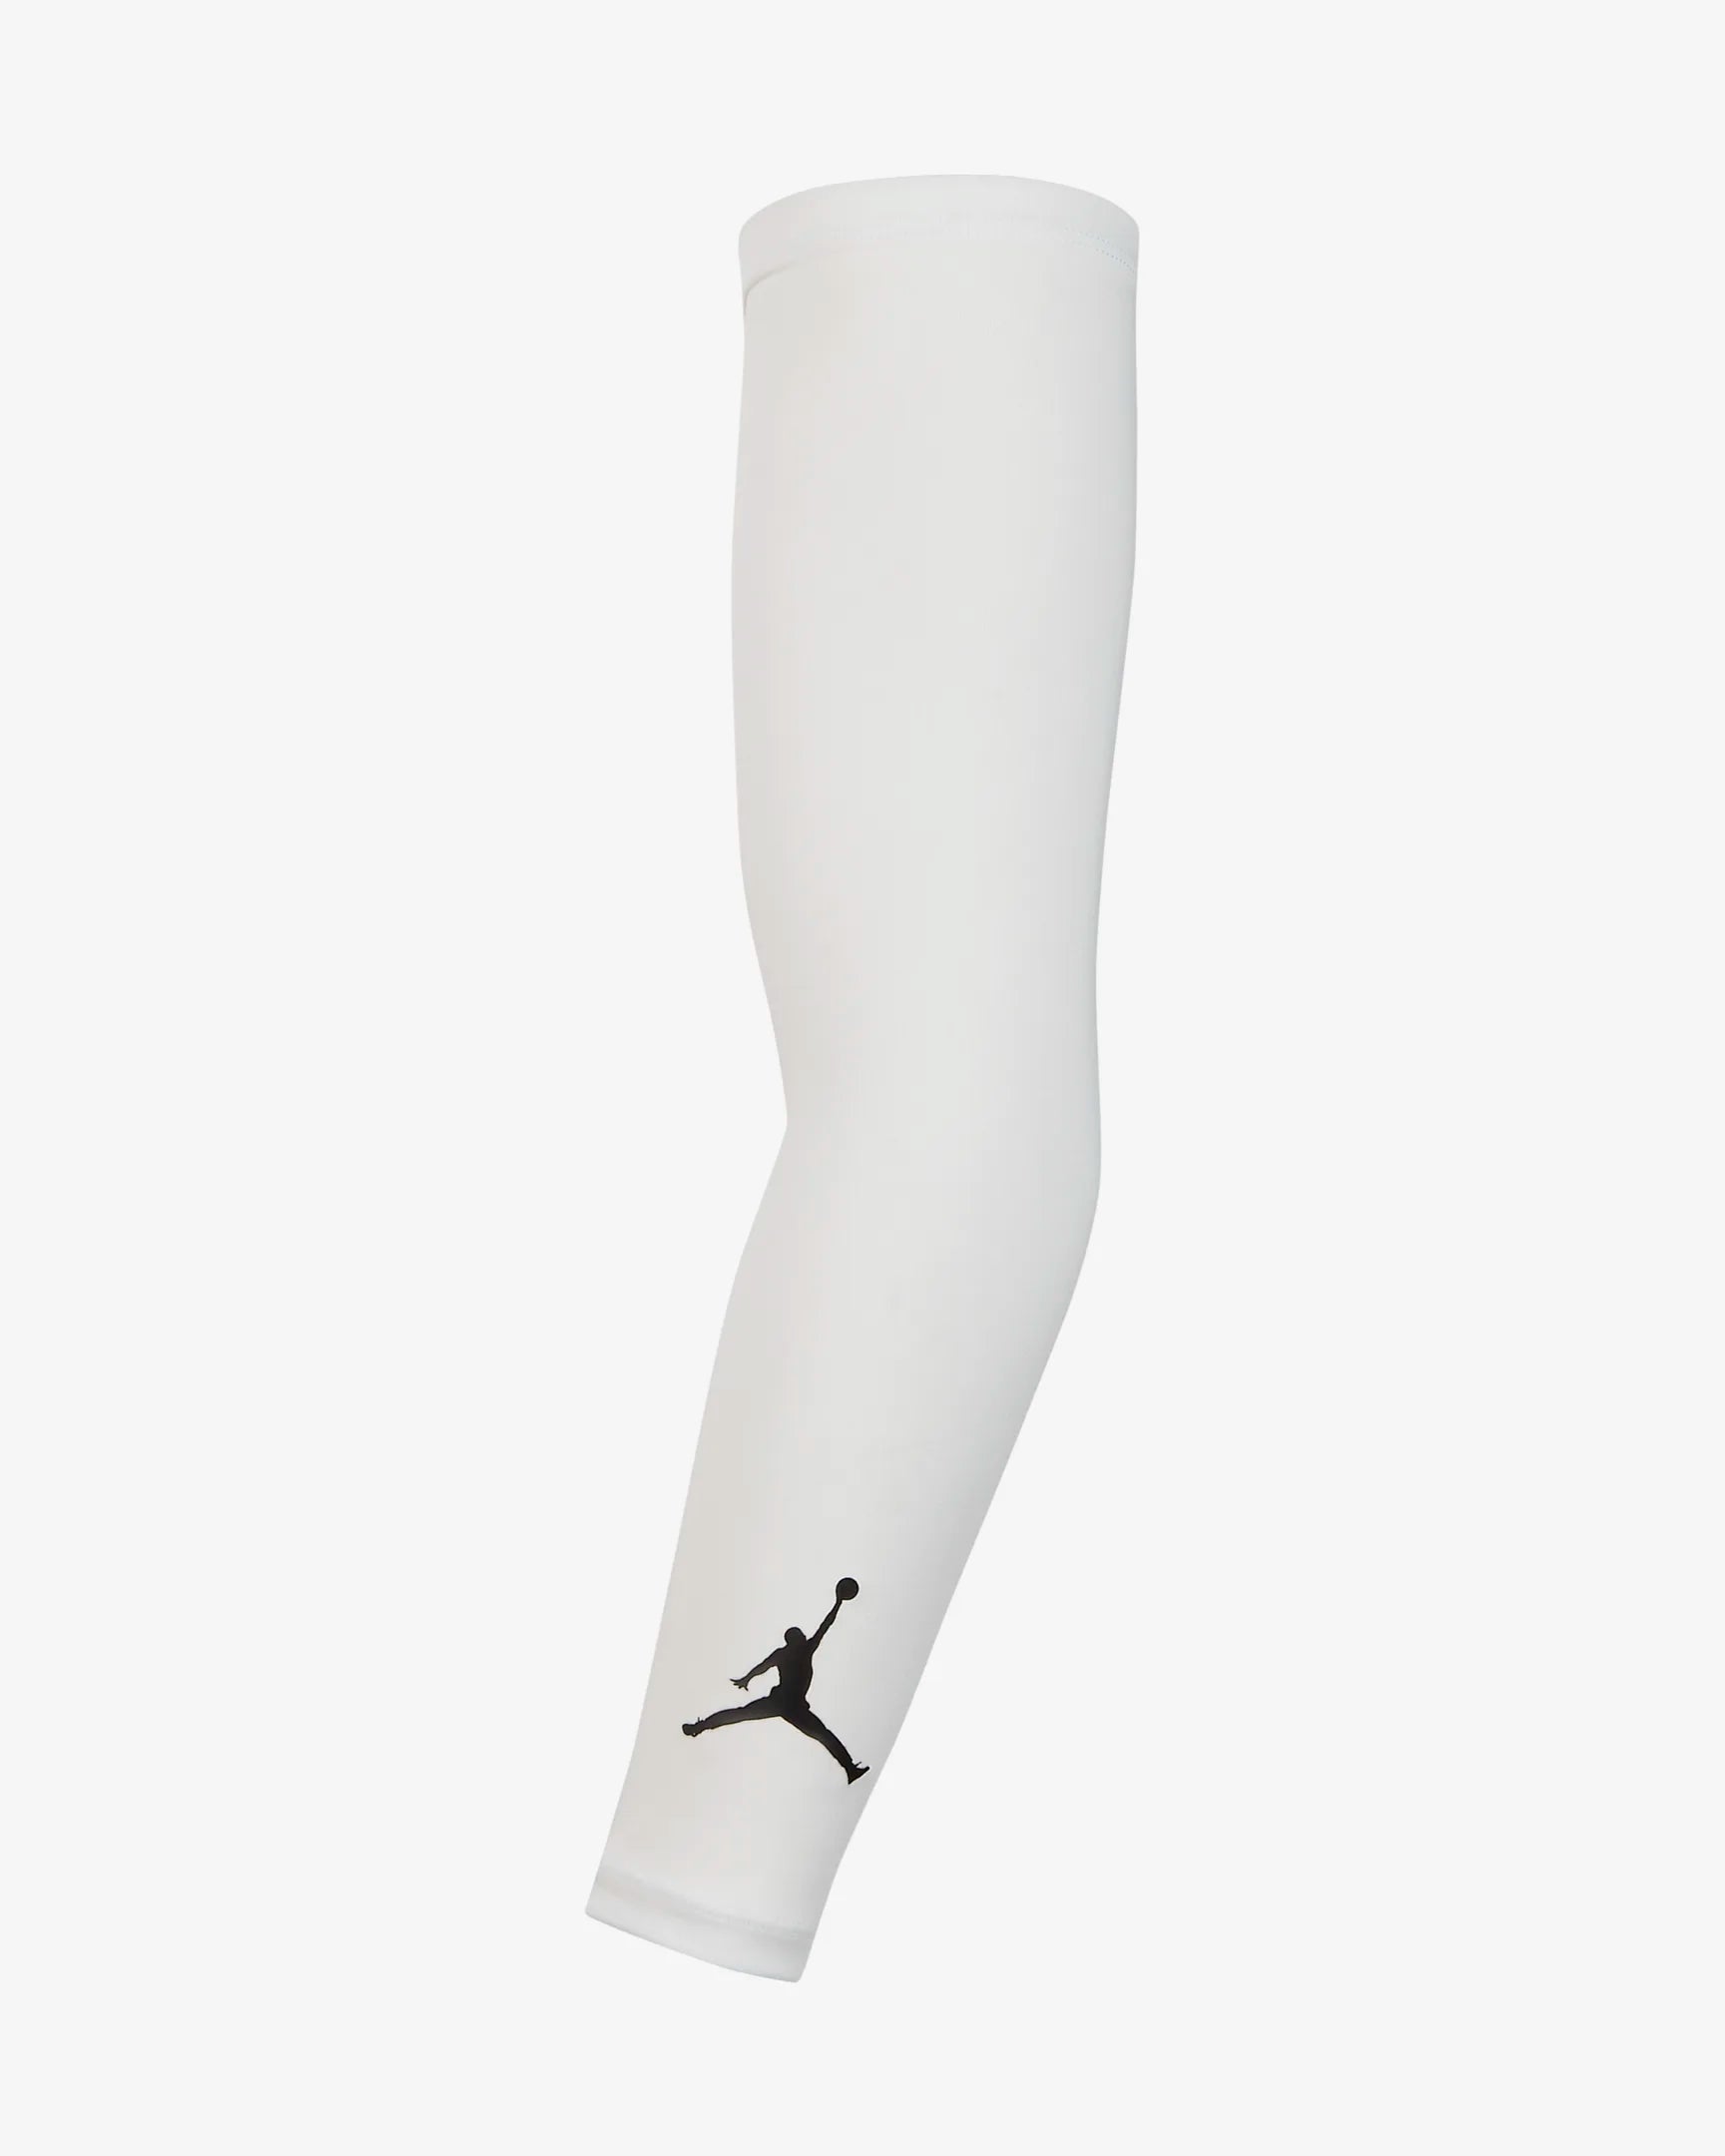  Nike NBA Shooter Sleeve - Pair(Black/White, SM